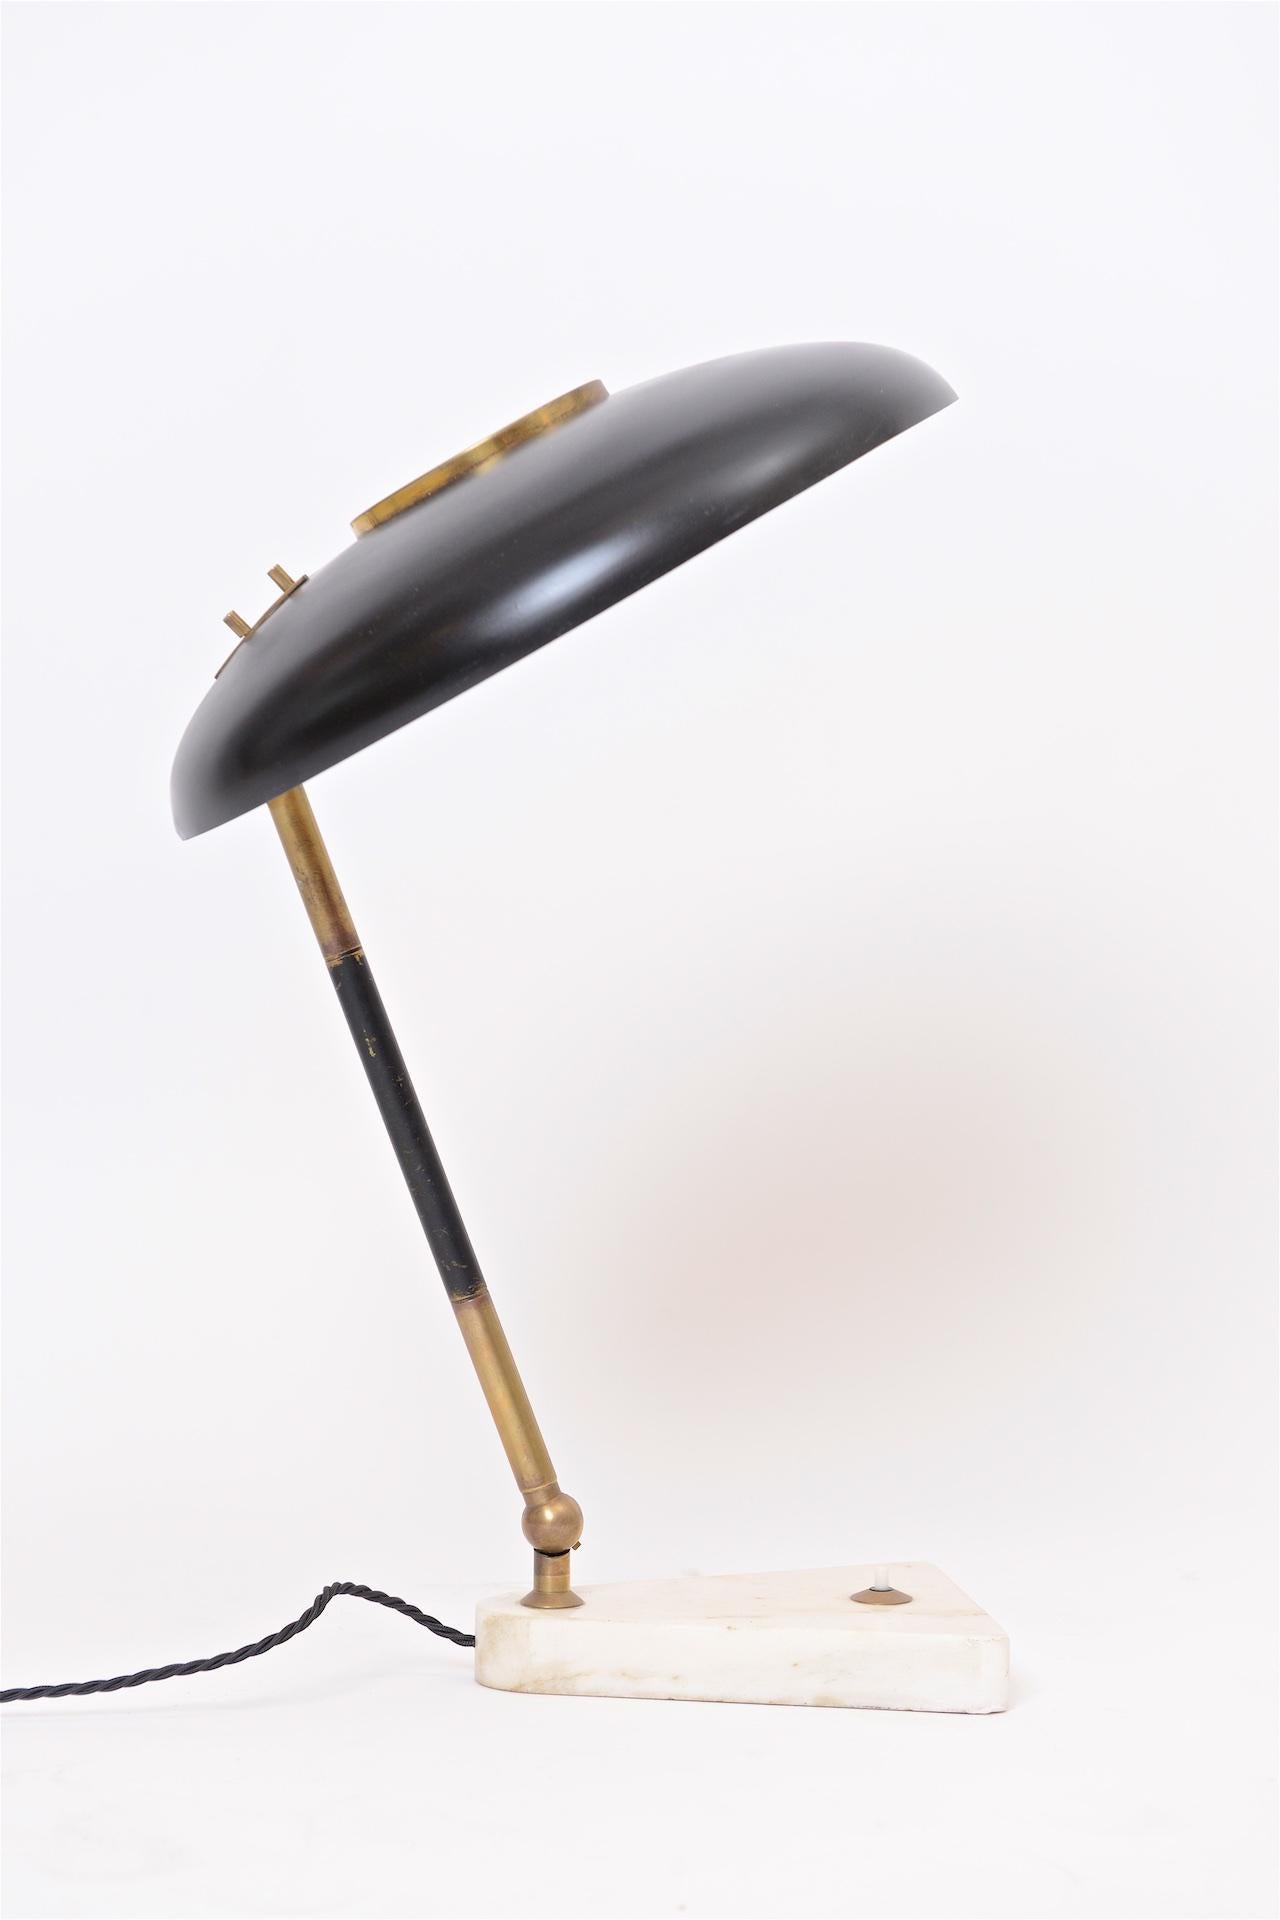 European Oscar Torlasco Desk Lamp for Lumi